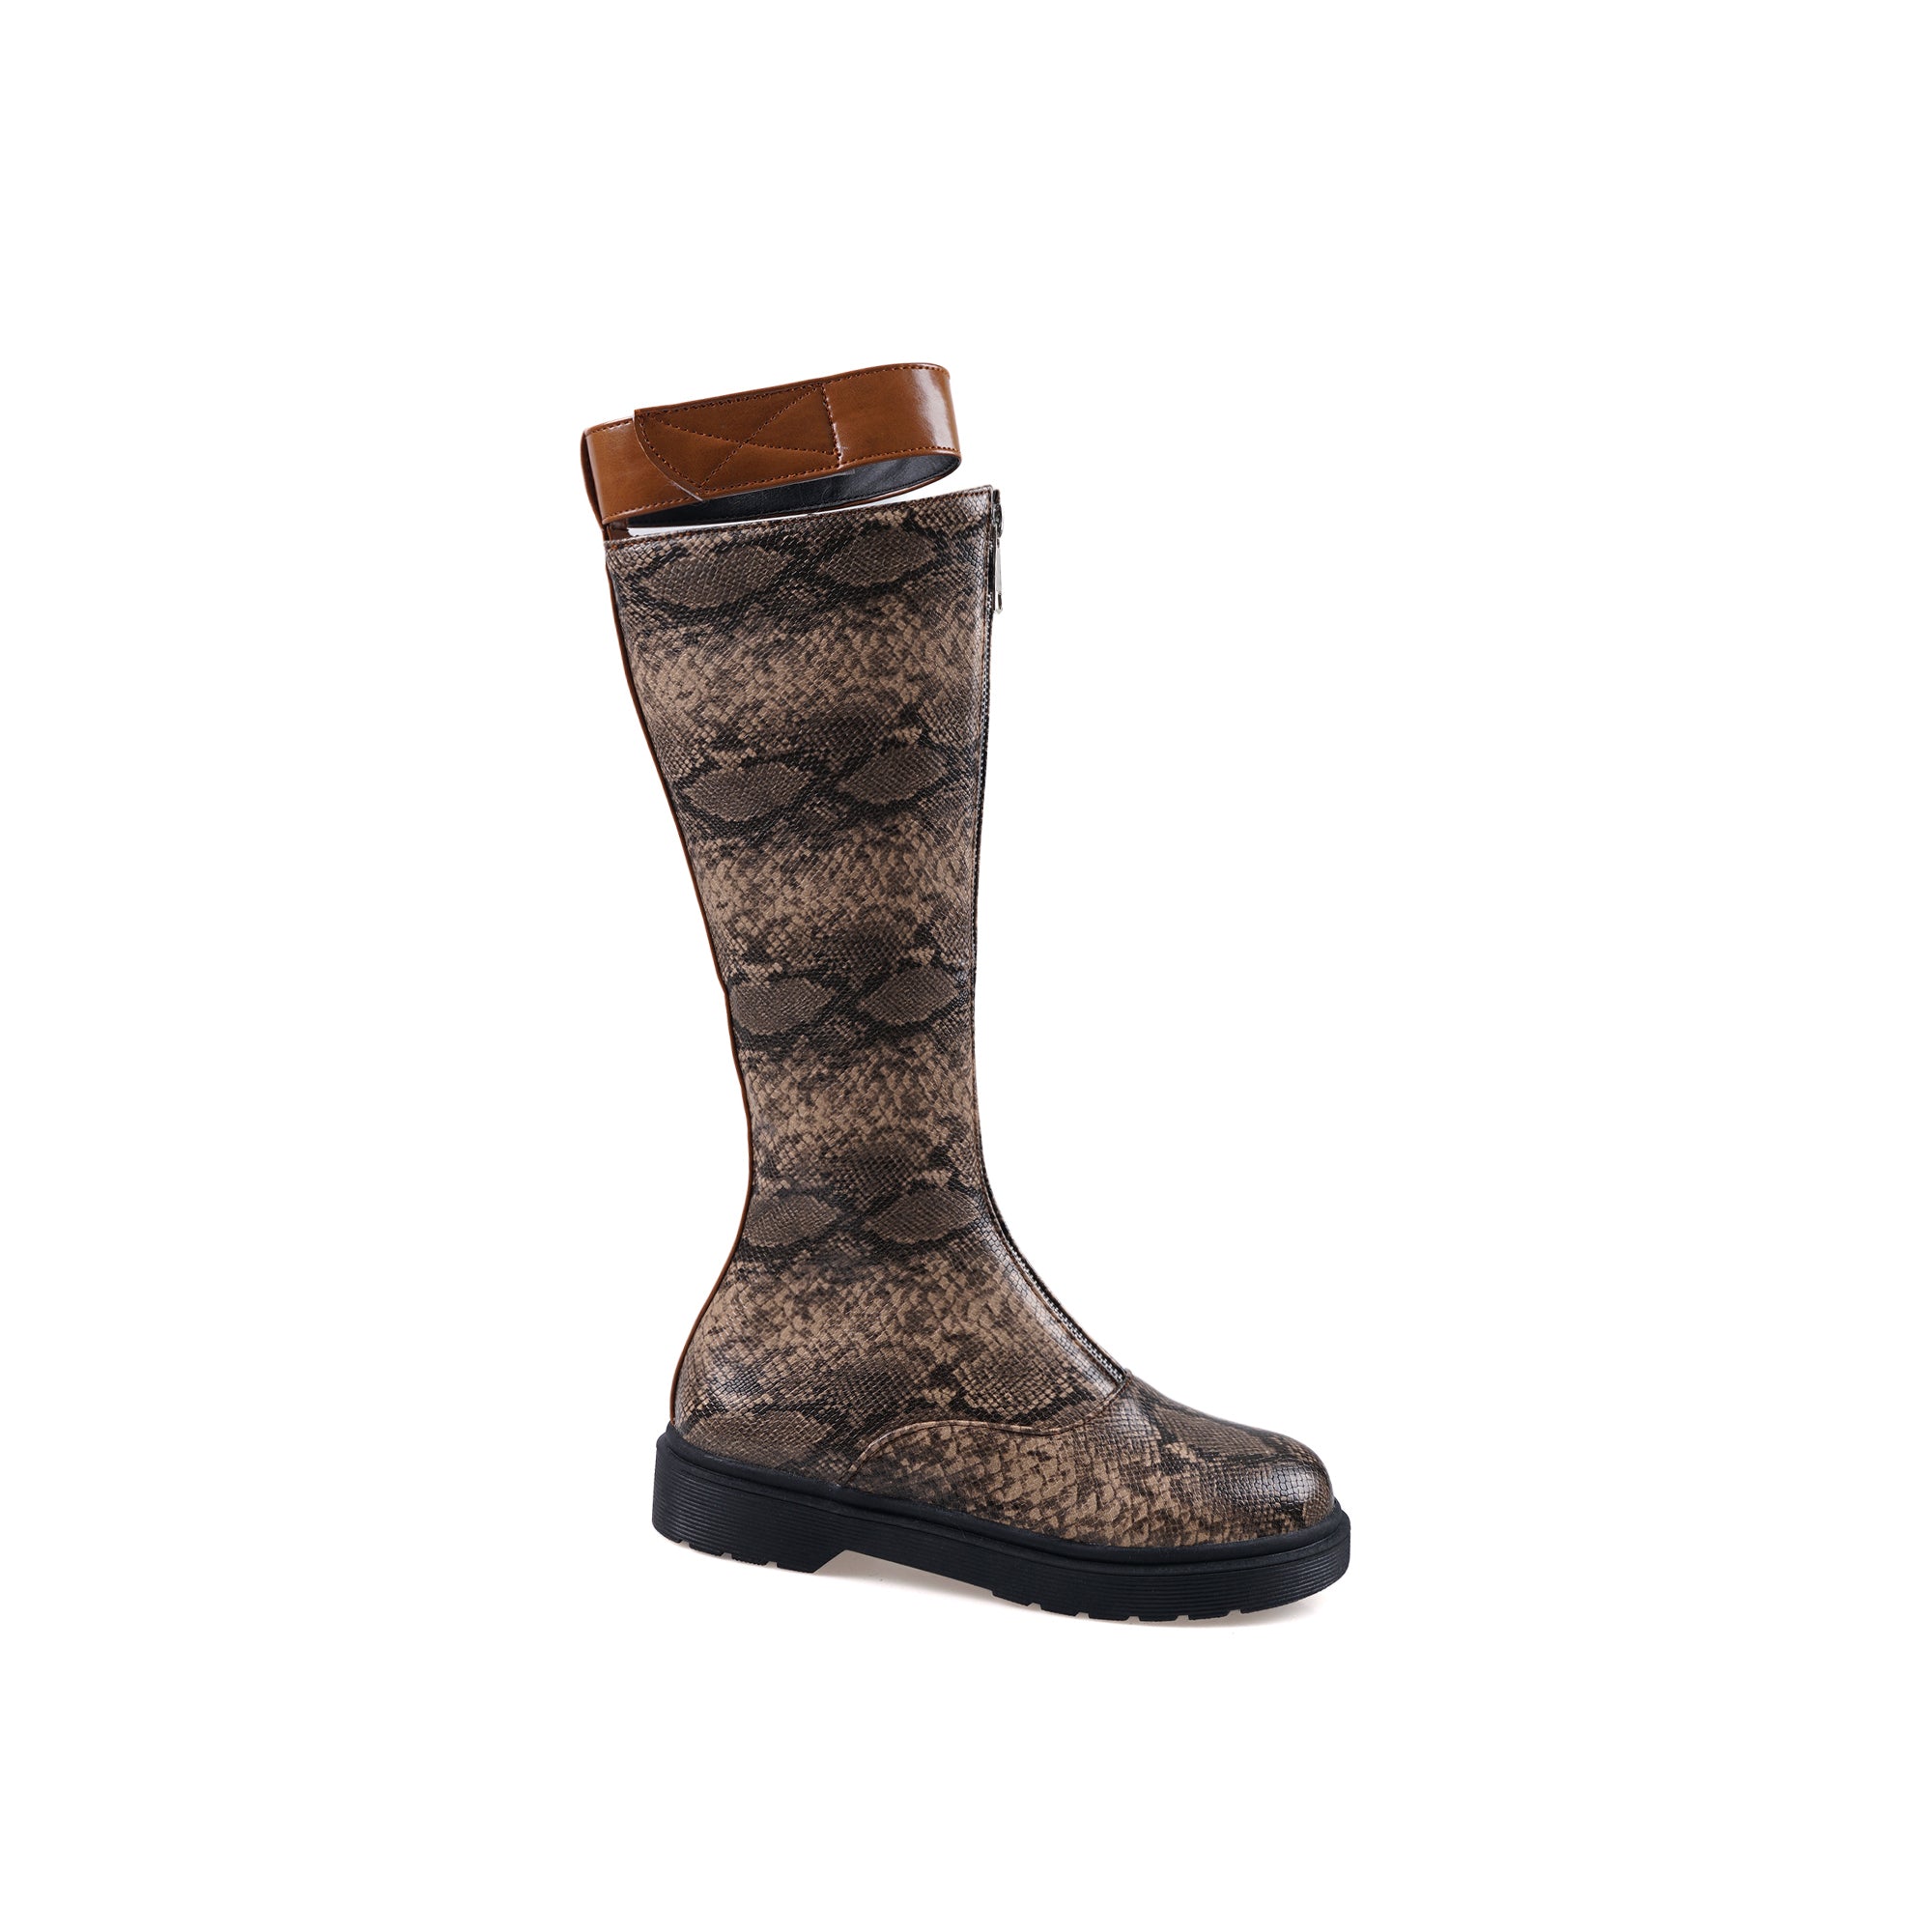 Bigsizeheels Fashion leggings and flat boots - Snakeskin freeshipping - bigsizeheel®-size5-size15 -All Plus Sizes Available!